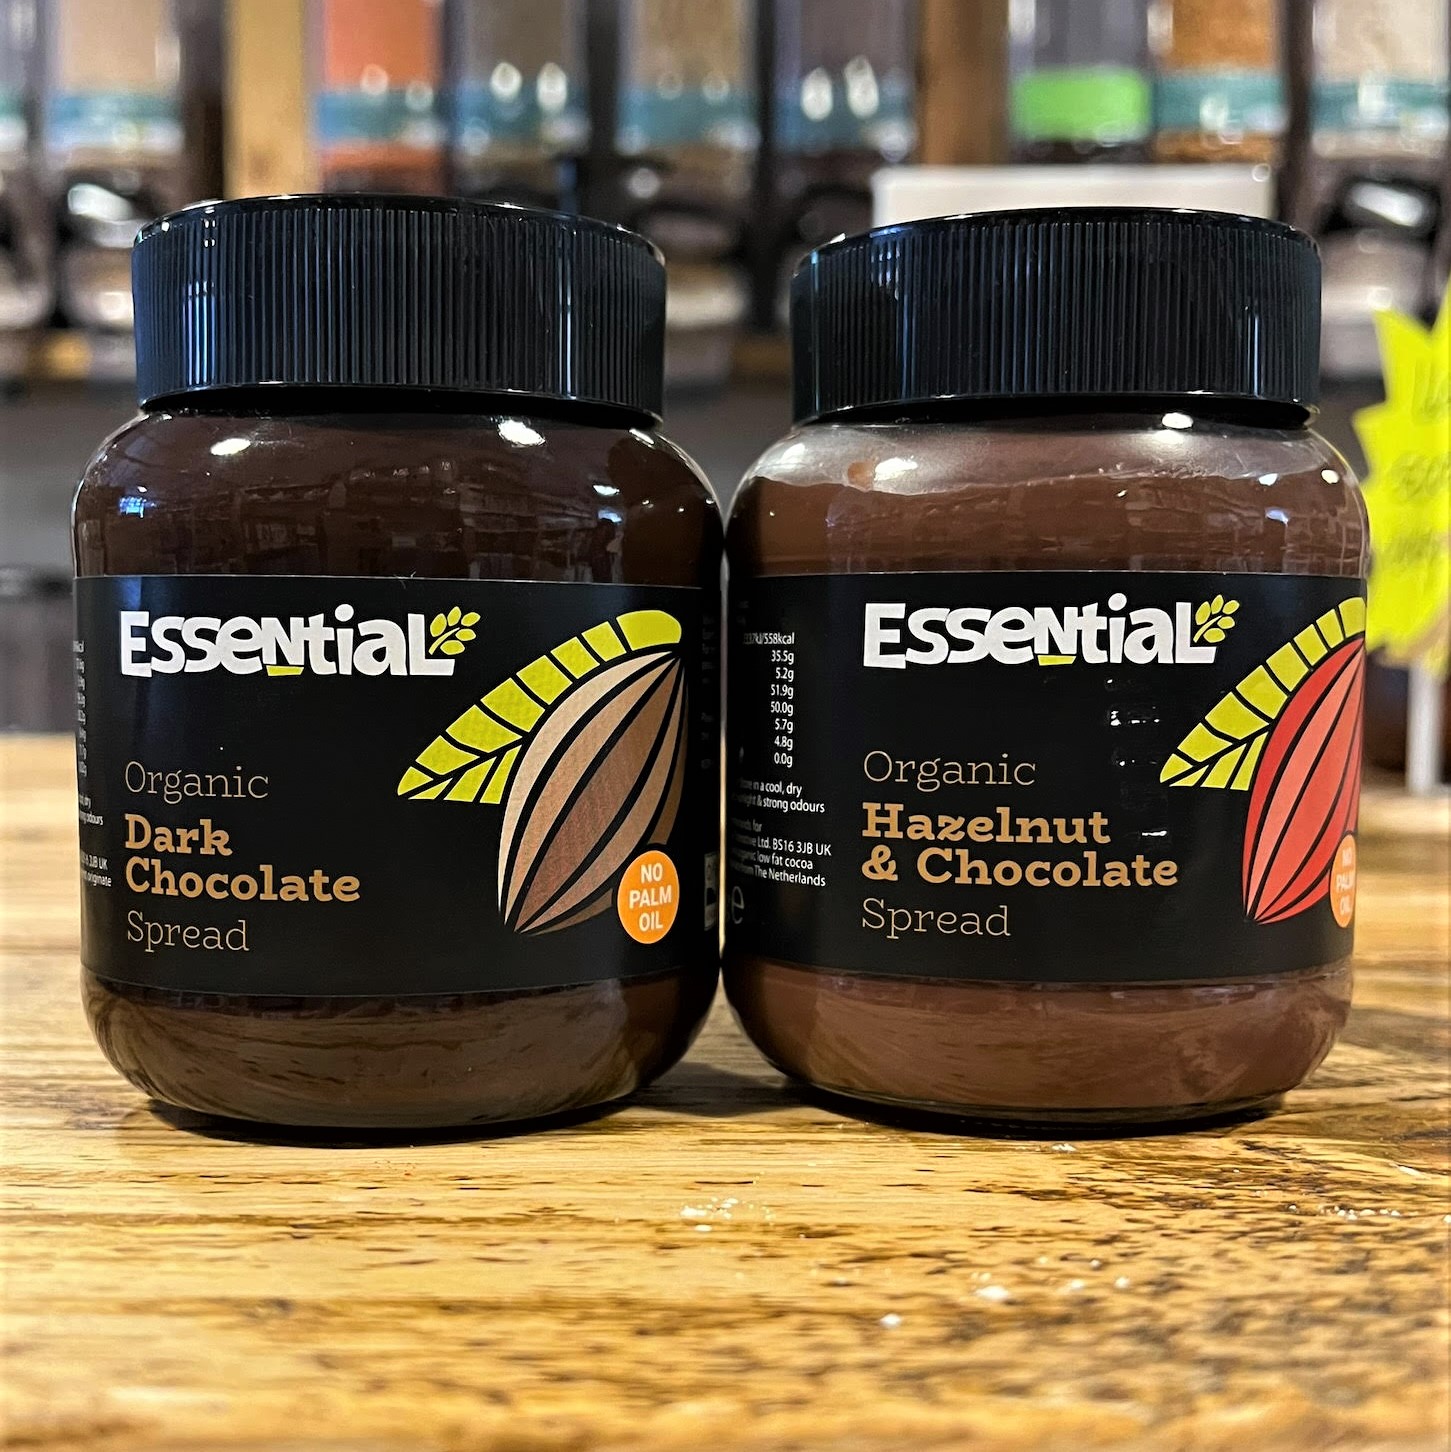 Chocolate Spread, 400g (Organic, Palm Oil Free) by Essential